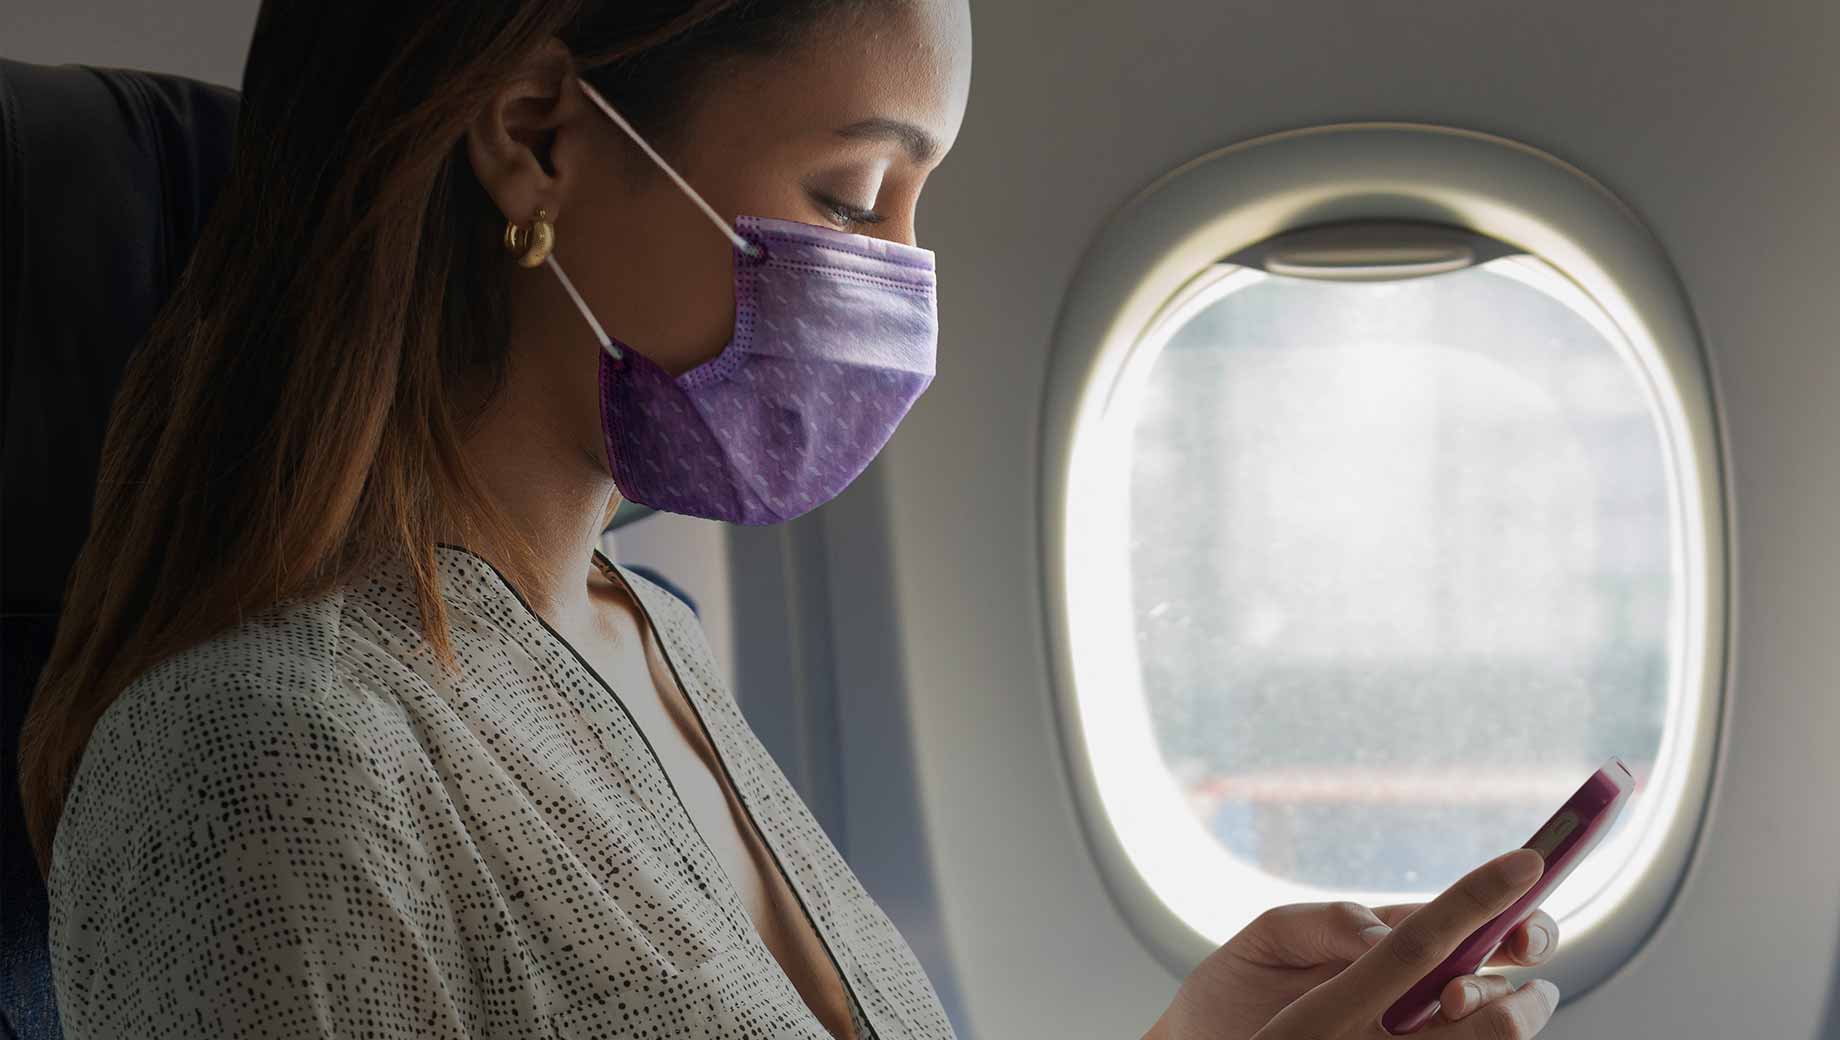 5 best face masks for traveling on long flights, per experts